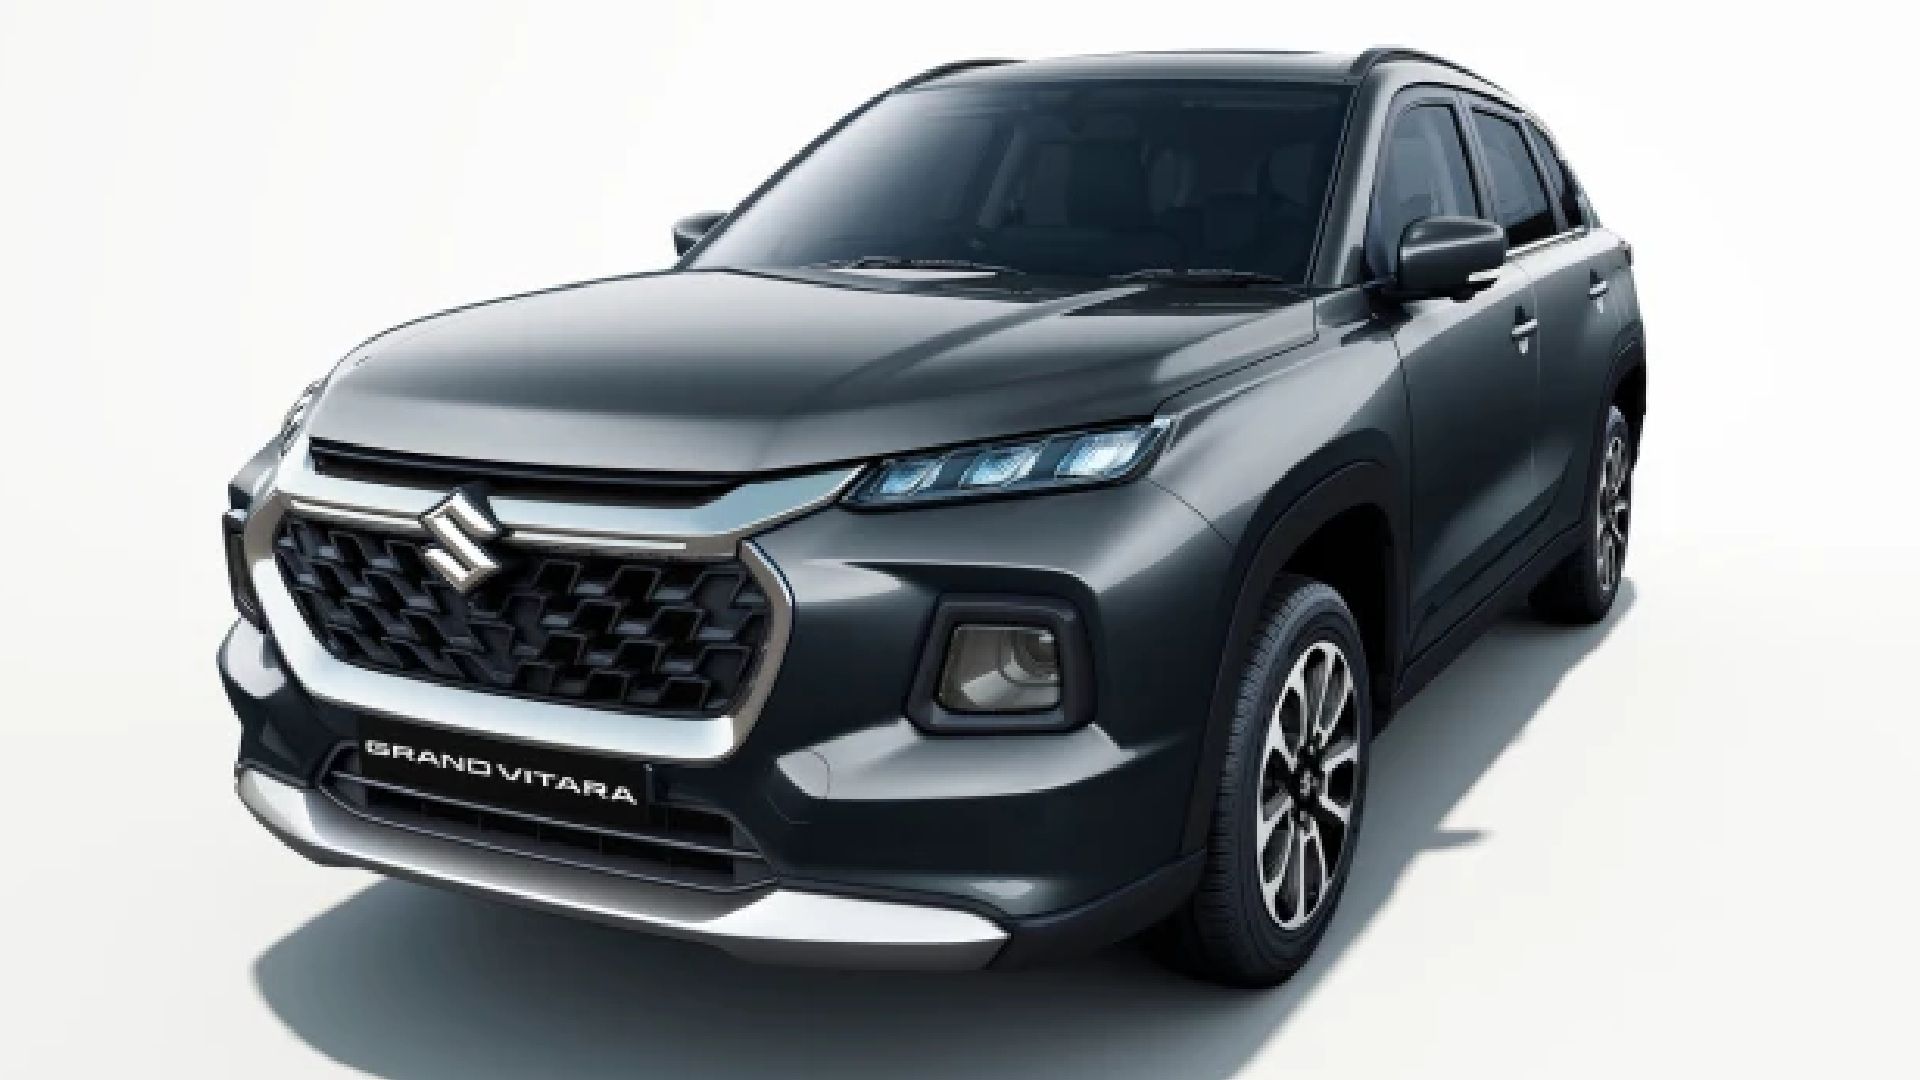 Suzuki presenta el nuevo Grand Vitara